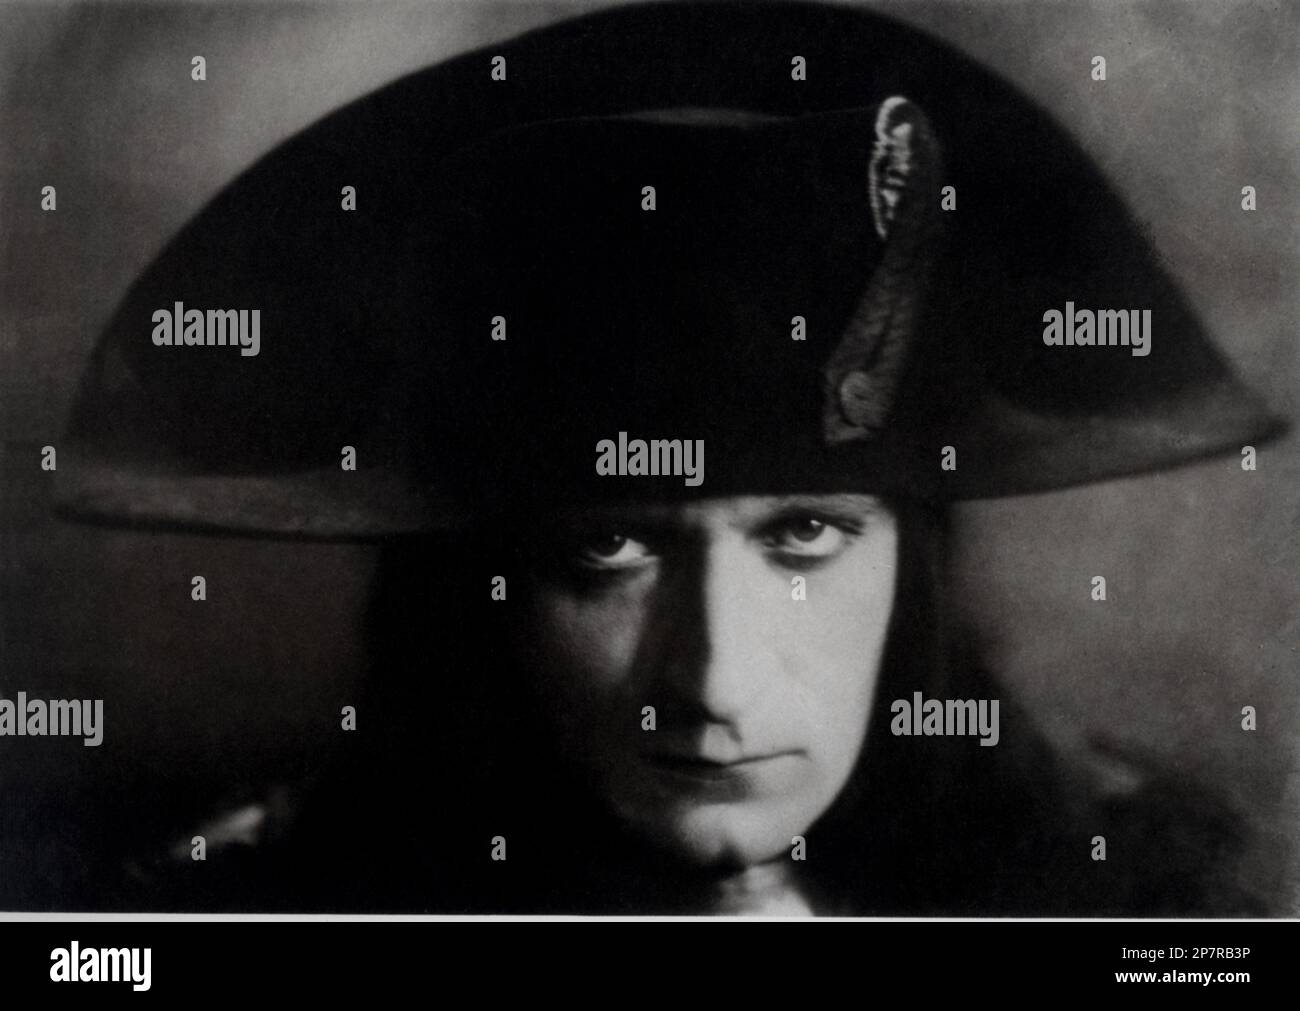 1926 : The french actor Albert Dieudonne' ( 1889 - 1976 )  in the movie  NAPOLEON by ABEL GANGE  - FILM - CINEMA   - film storico - hat - cappello - FRANCE - FRANCIA  - Napoleone Bonaparte  Buonaparte ----  Archivio GBB Stock Photo